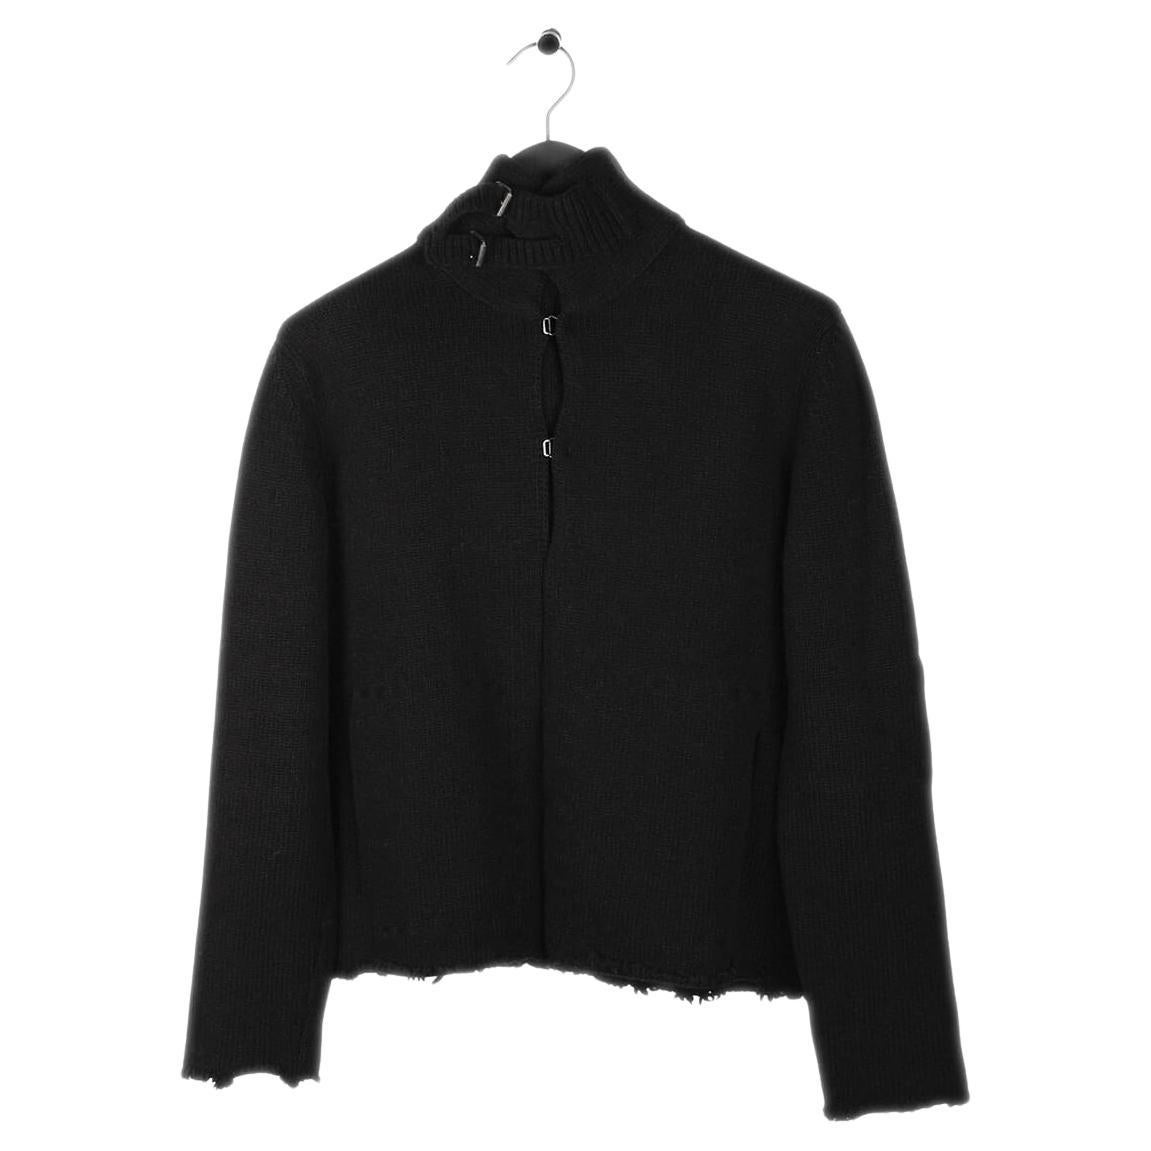 Yves Saint Laurent Men Rive Gauche Cardigan Merino Wool Sweater Size M S019